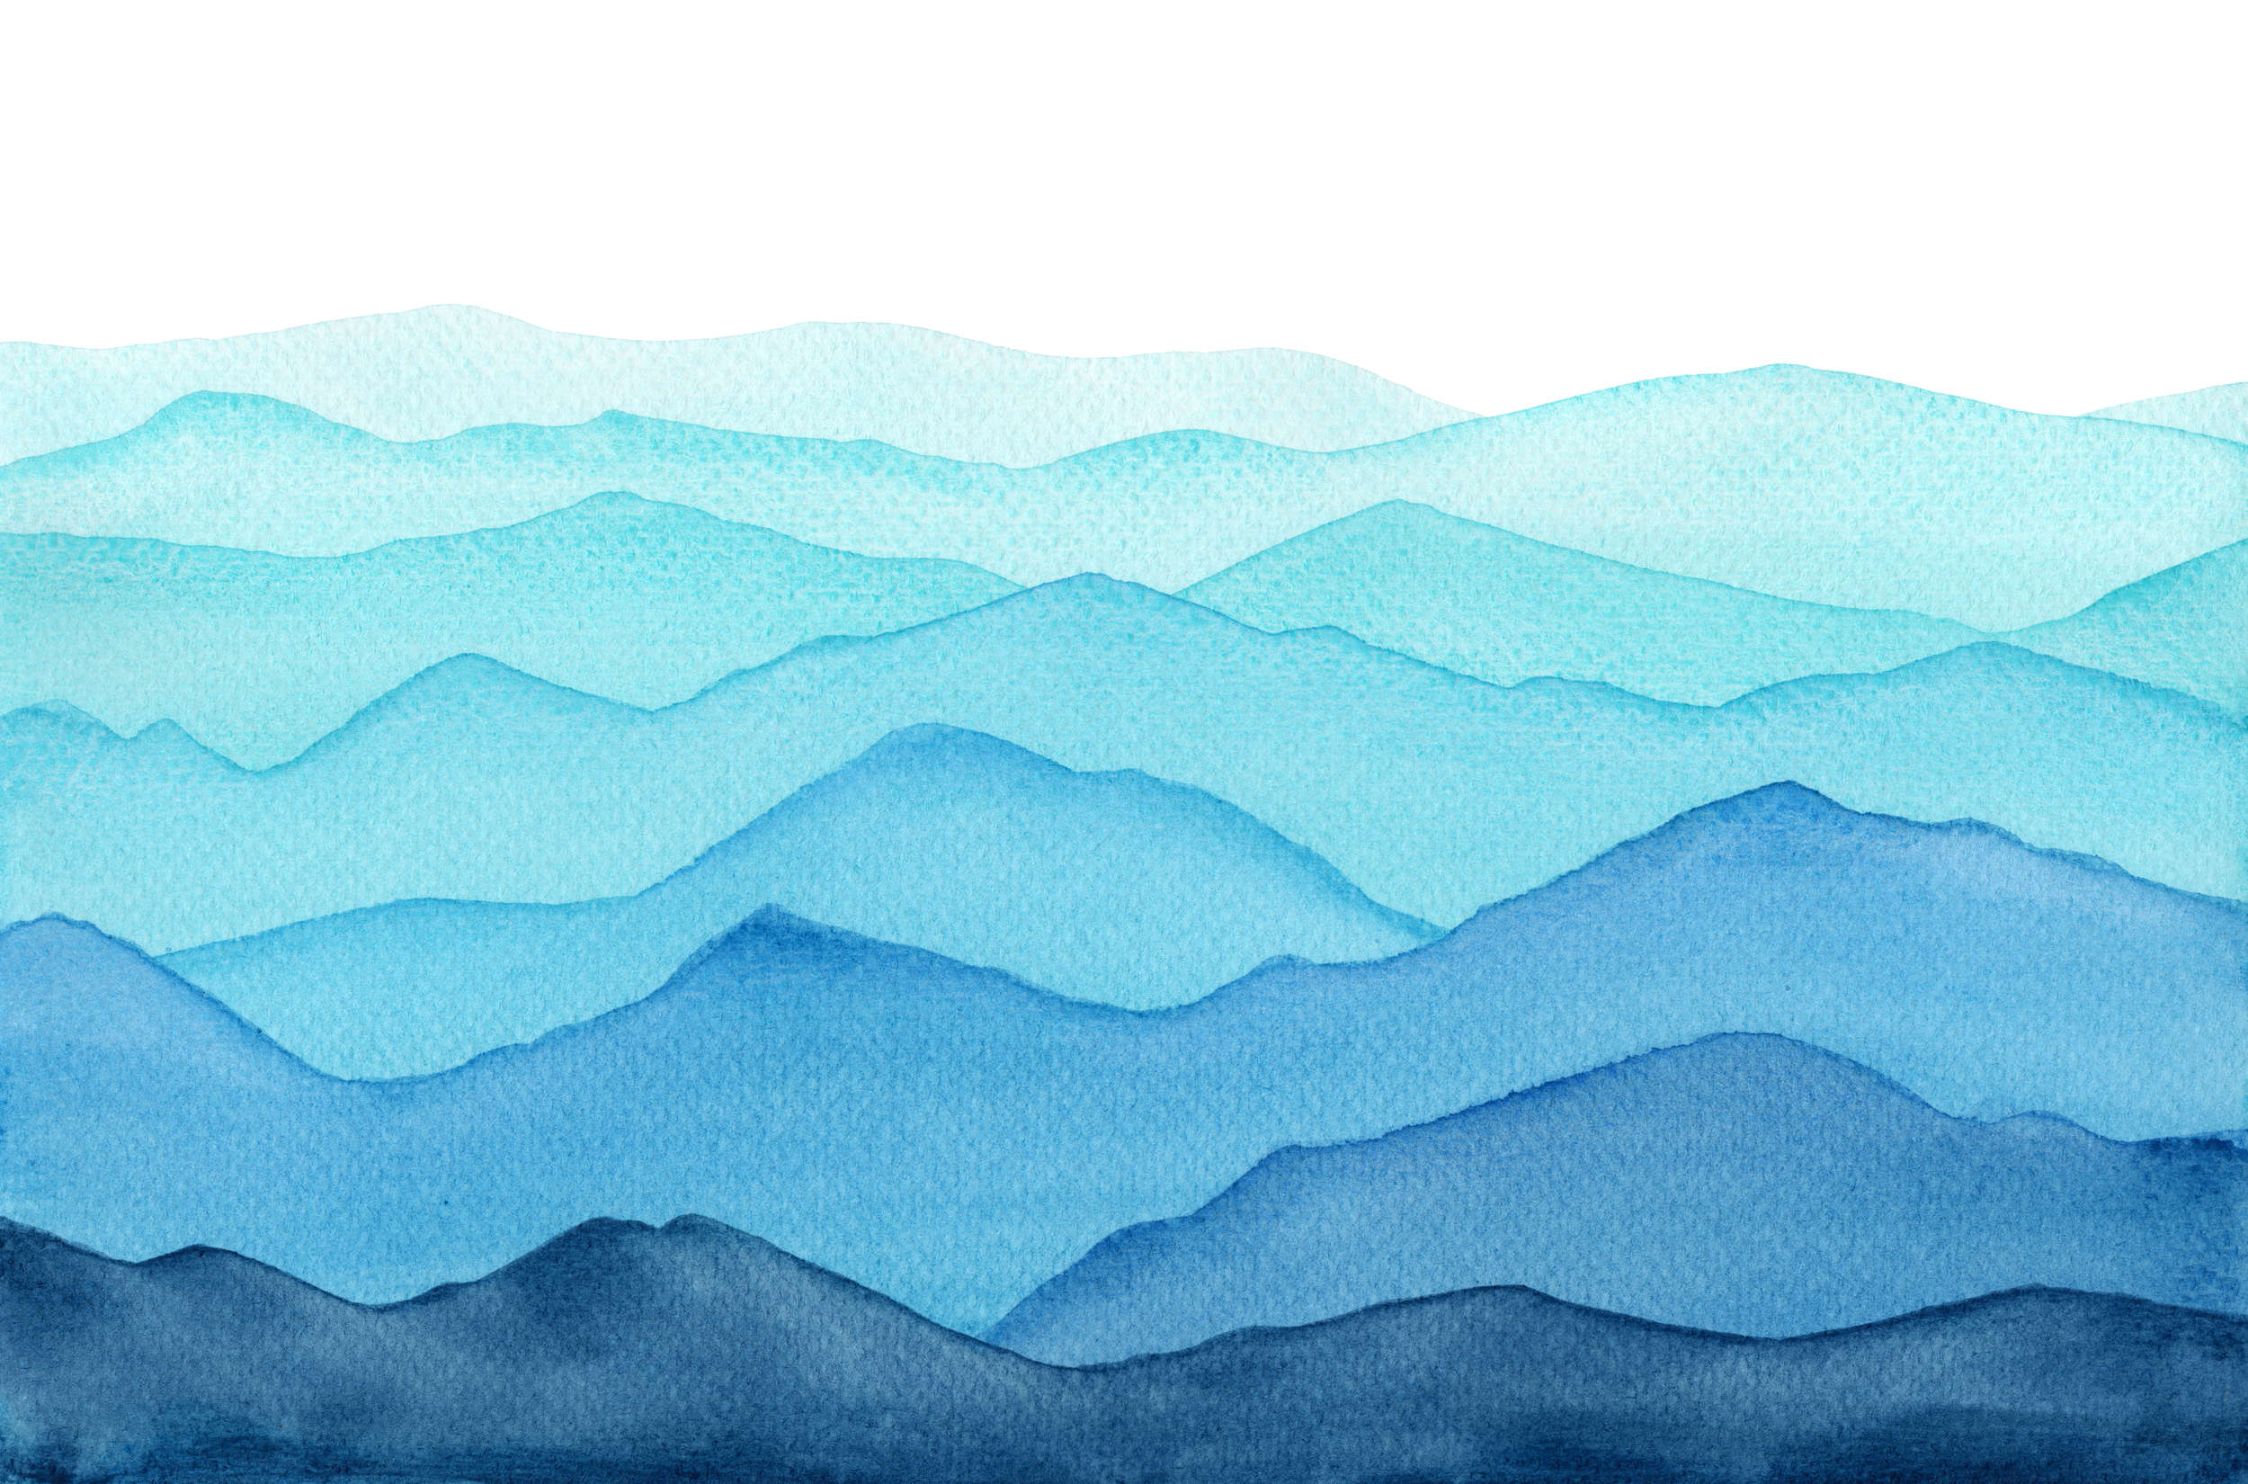             Fototapete Meer mit Wellen in aquarell – Glattes & perlmutt-schimmerndes Vlies
        